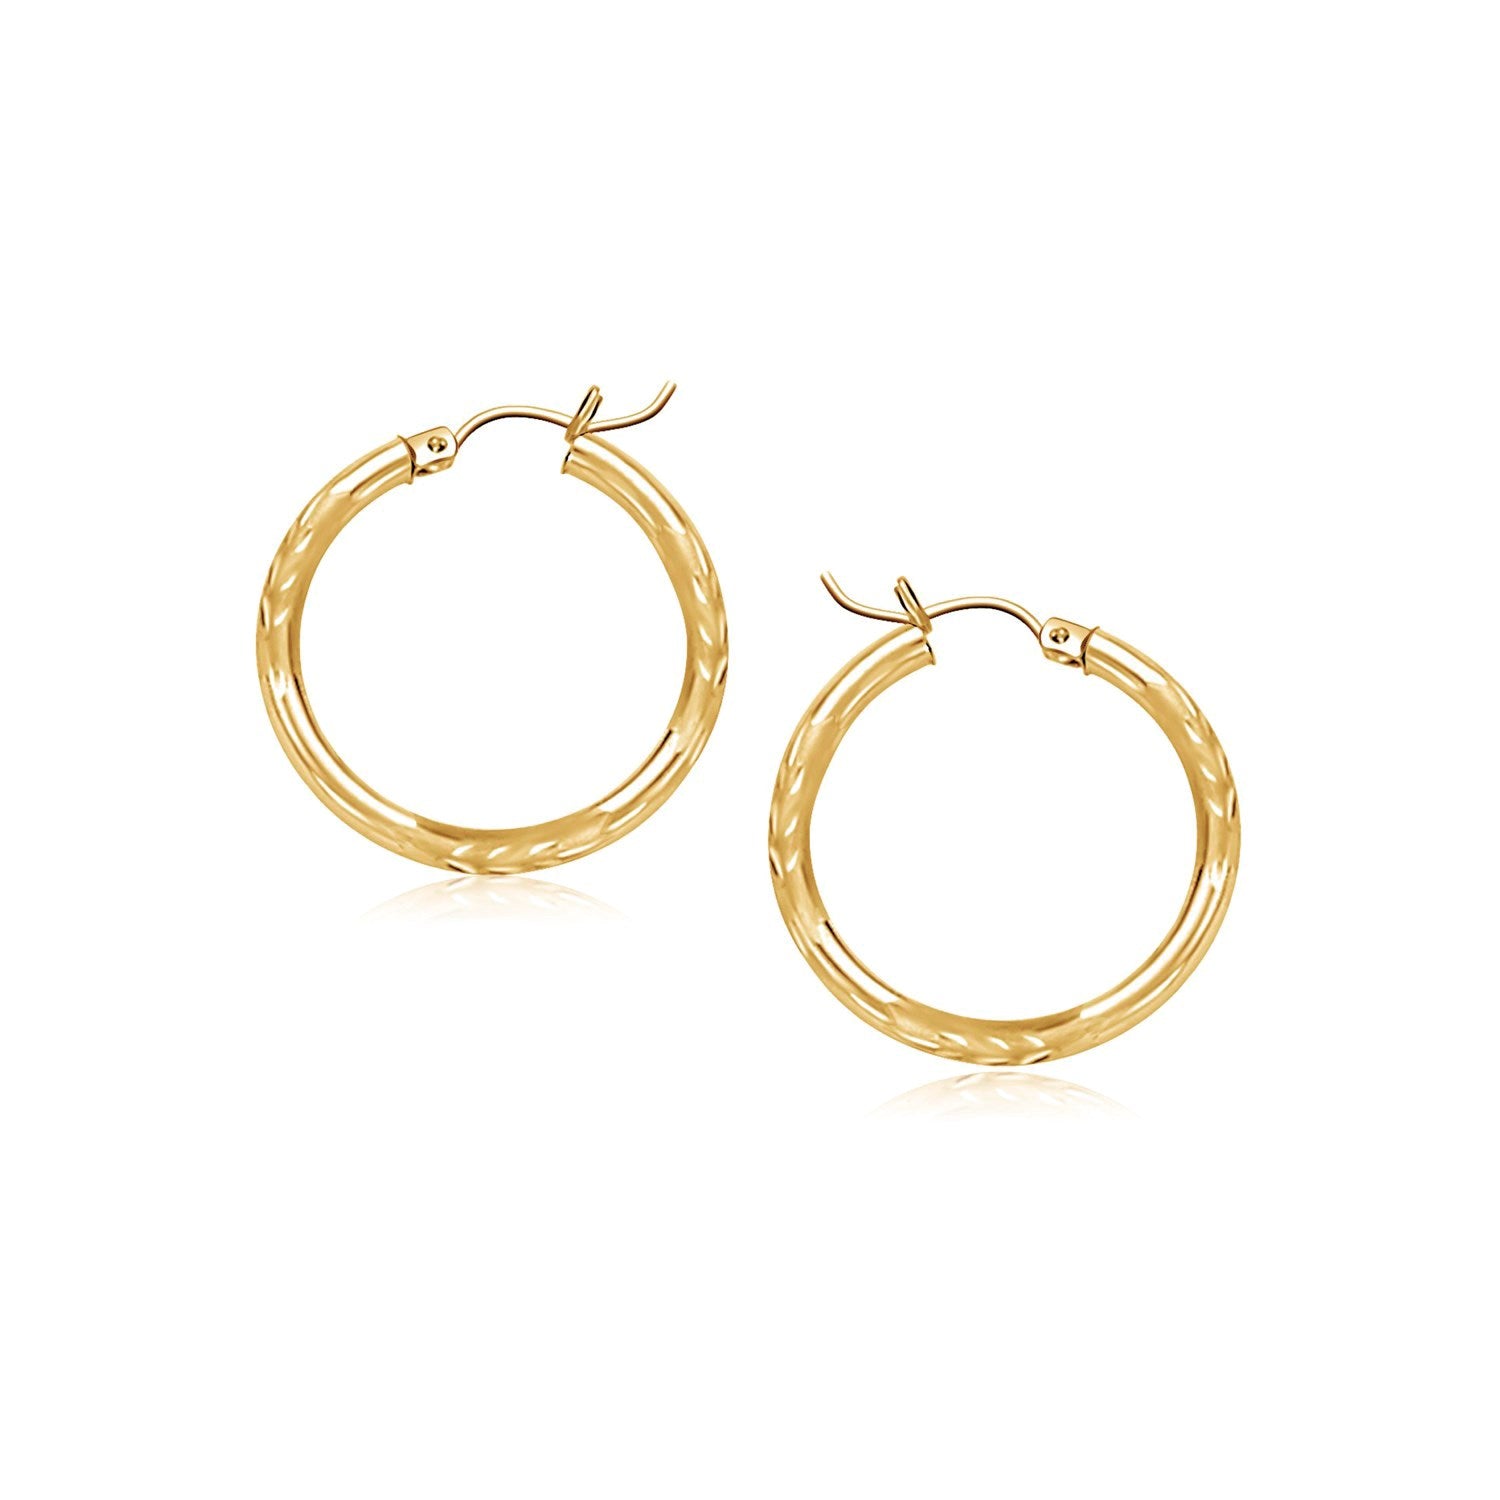 Solid 10k Yellow Gold & Diamond Flat Spiral Dangle/Drop Earrings